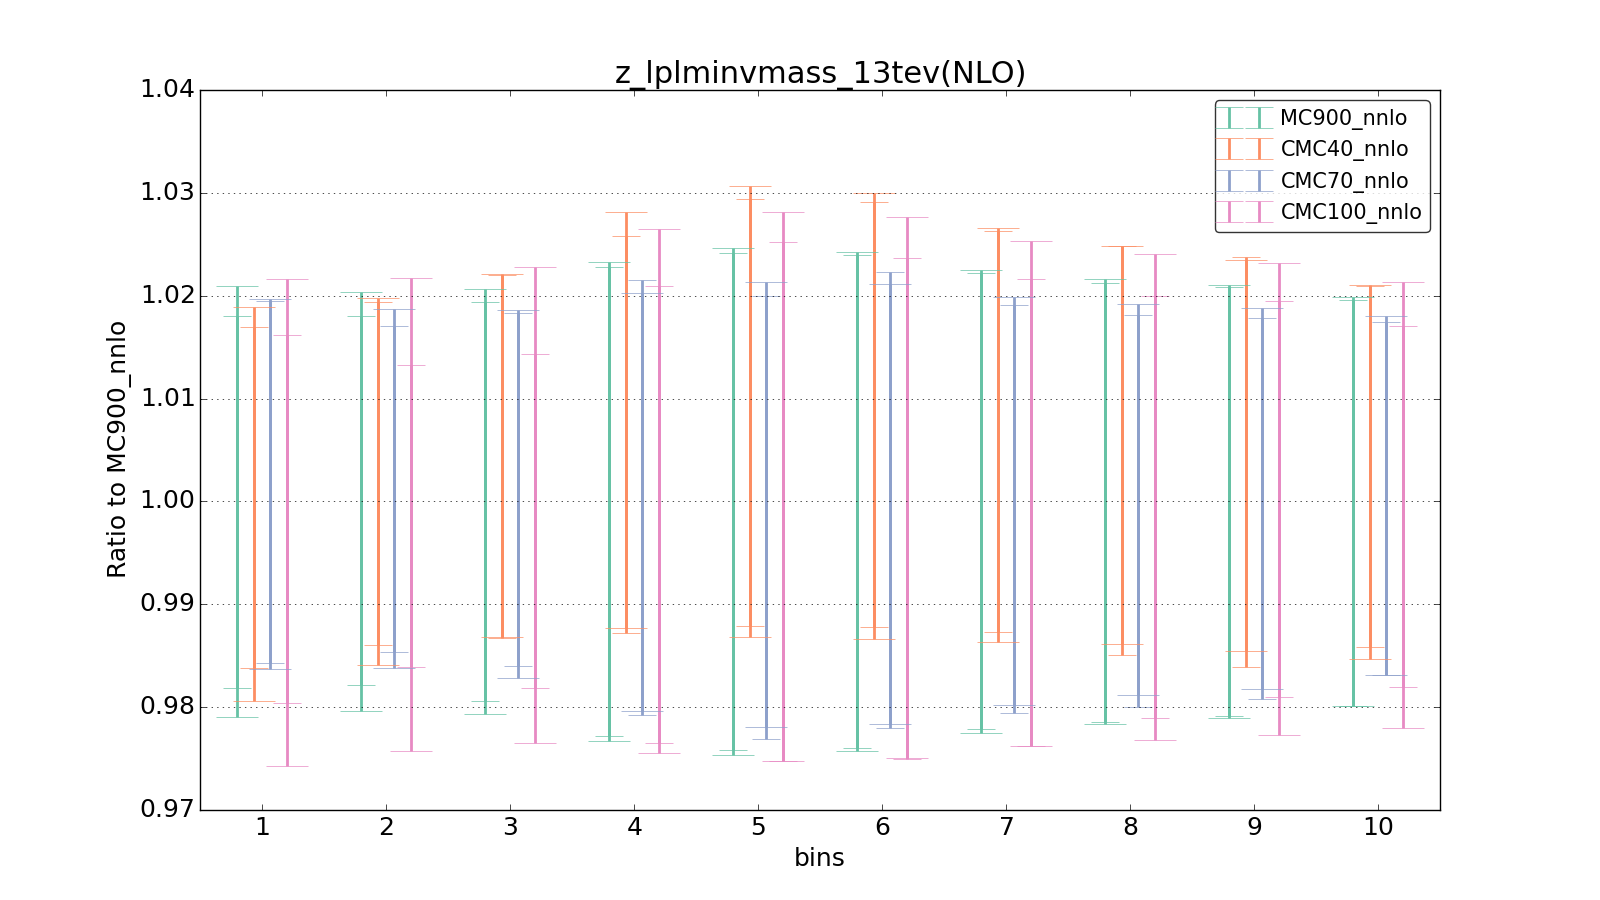 figure plots/CMCpheno/group_0_ciplot_z_lplminvmass_13tev(NLO).png